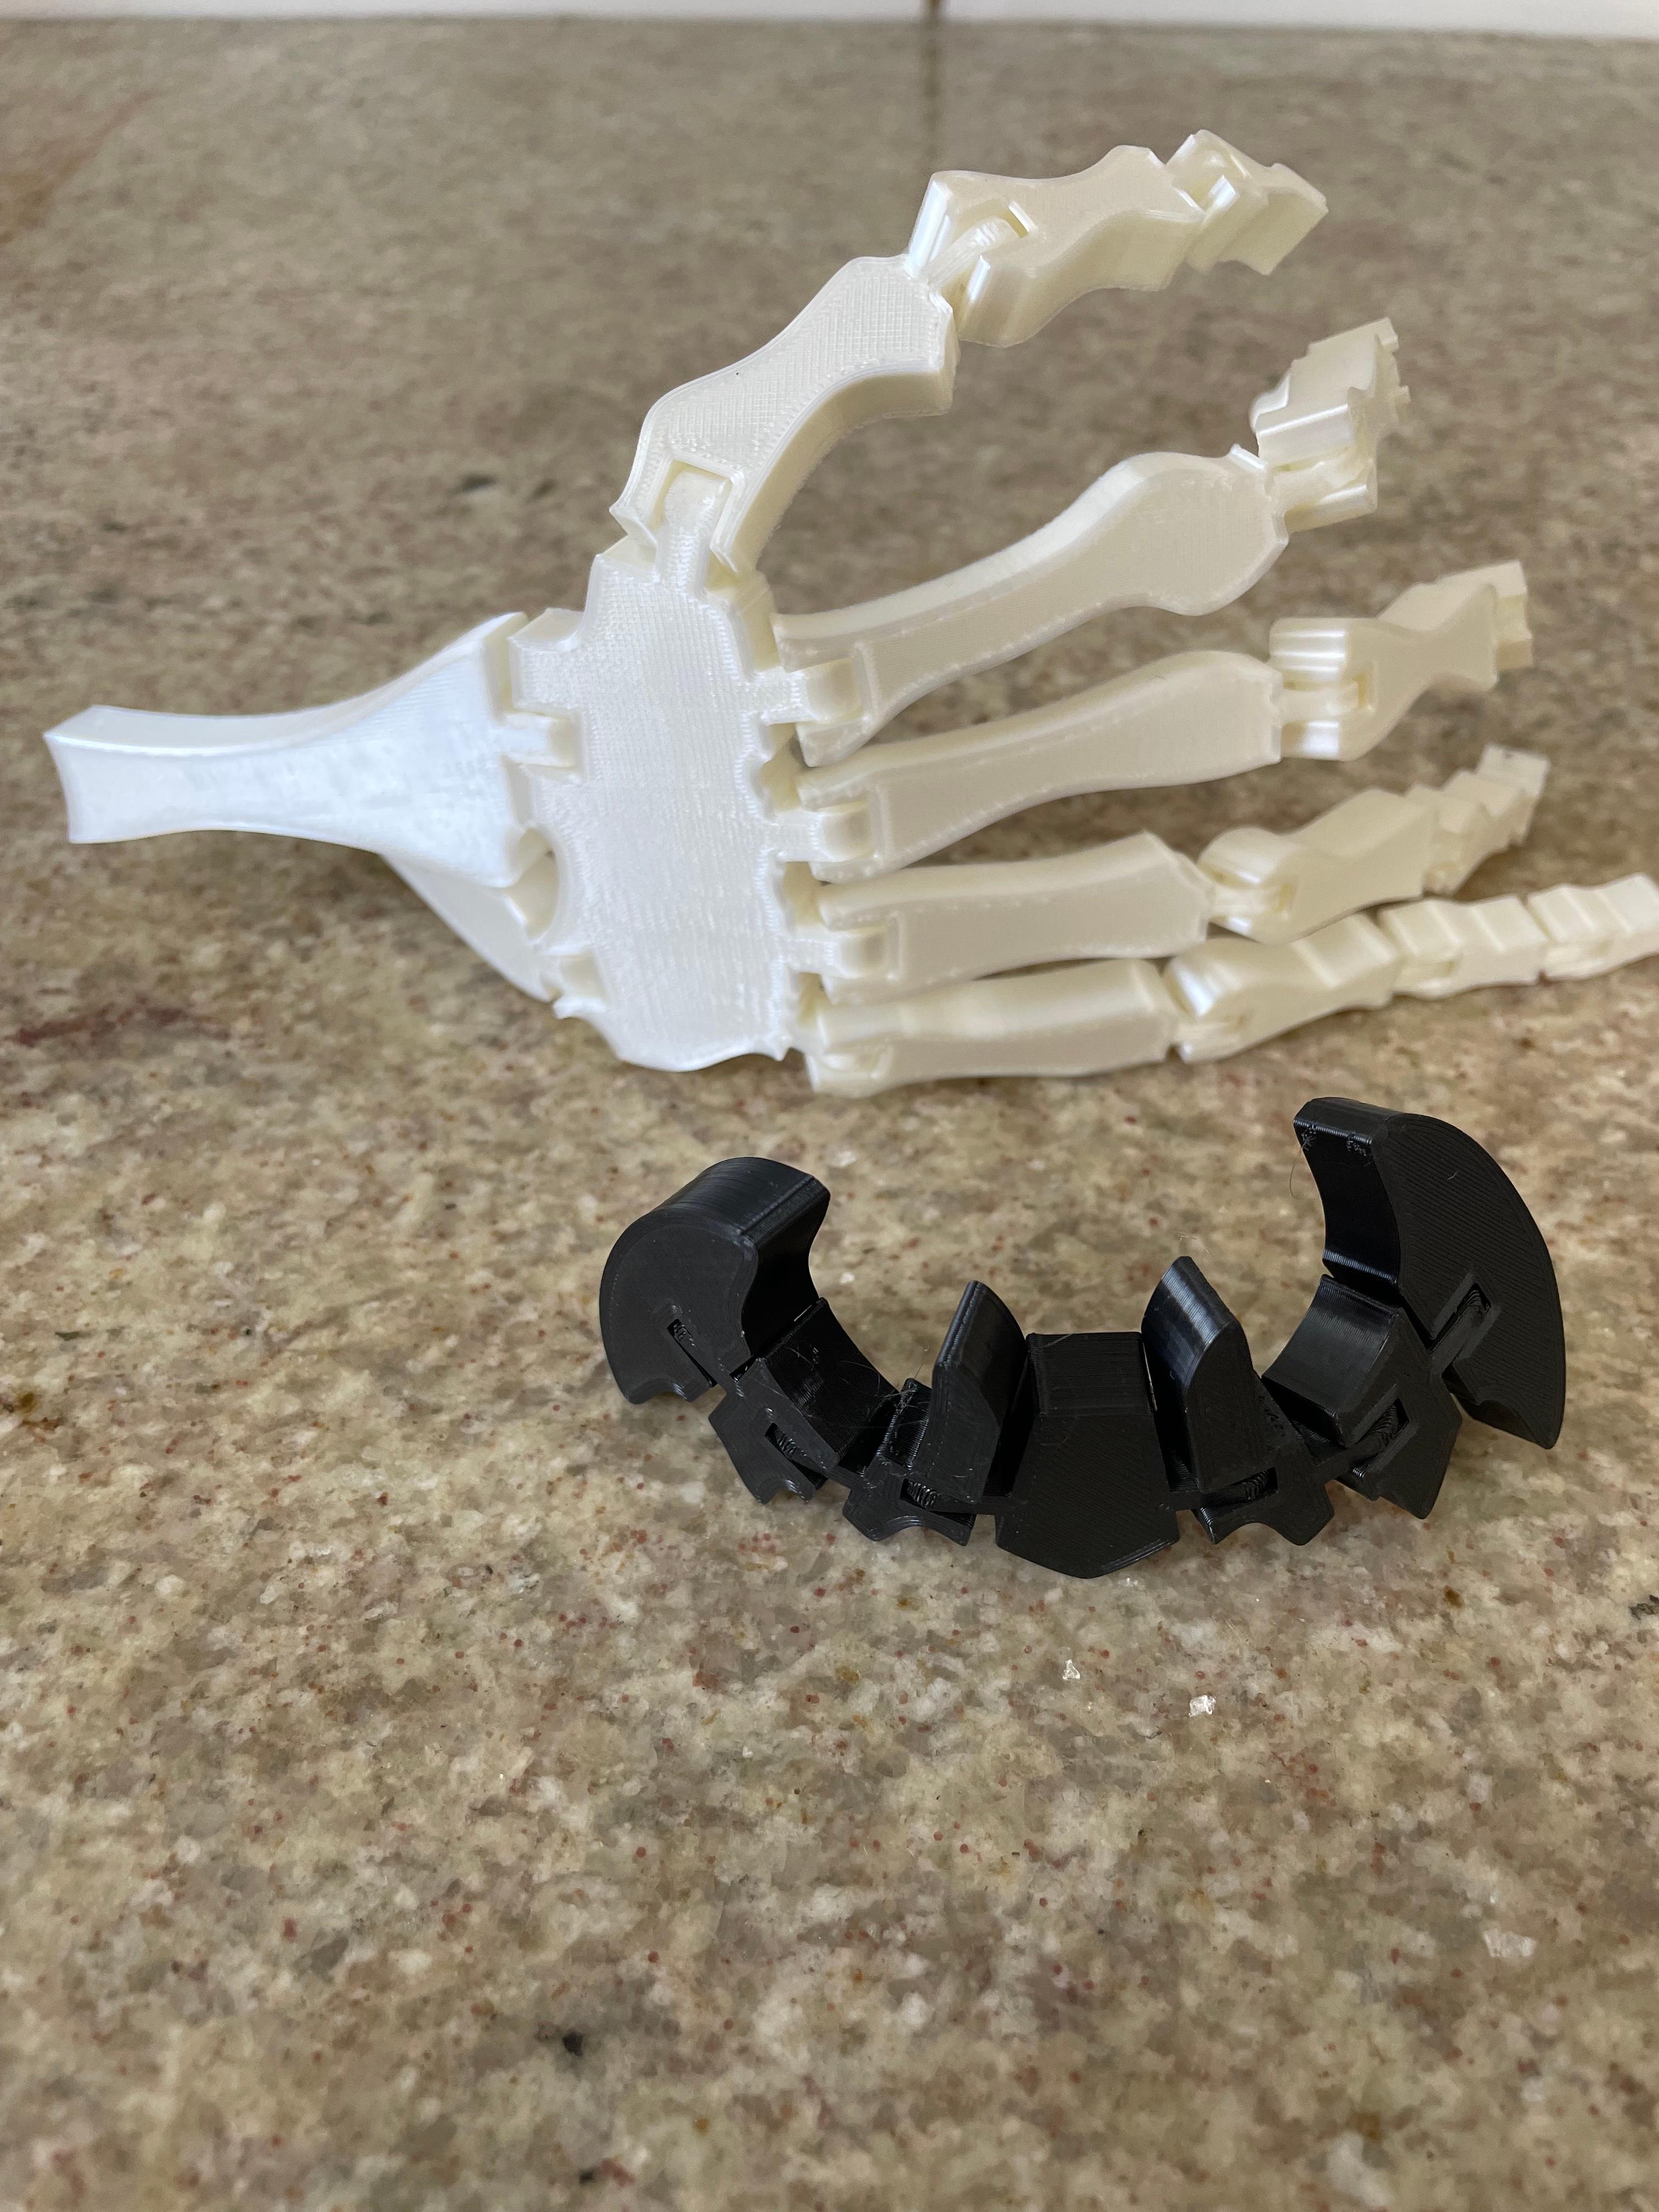 Spooky Flexi Skeleton Hand! Articulated! Bone Hand! 3d model